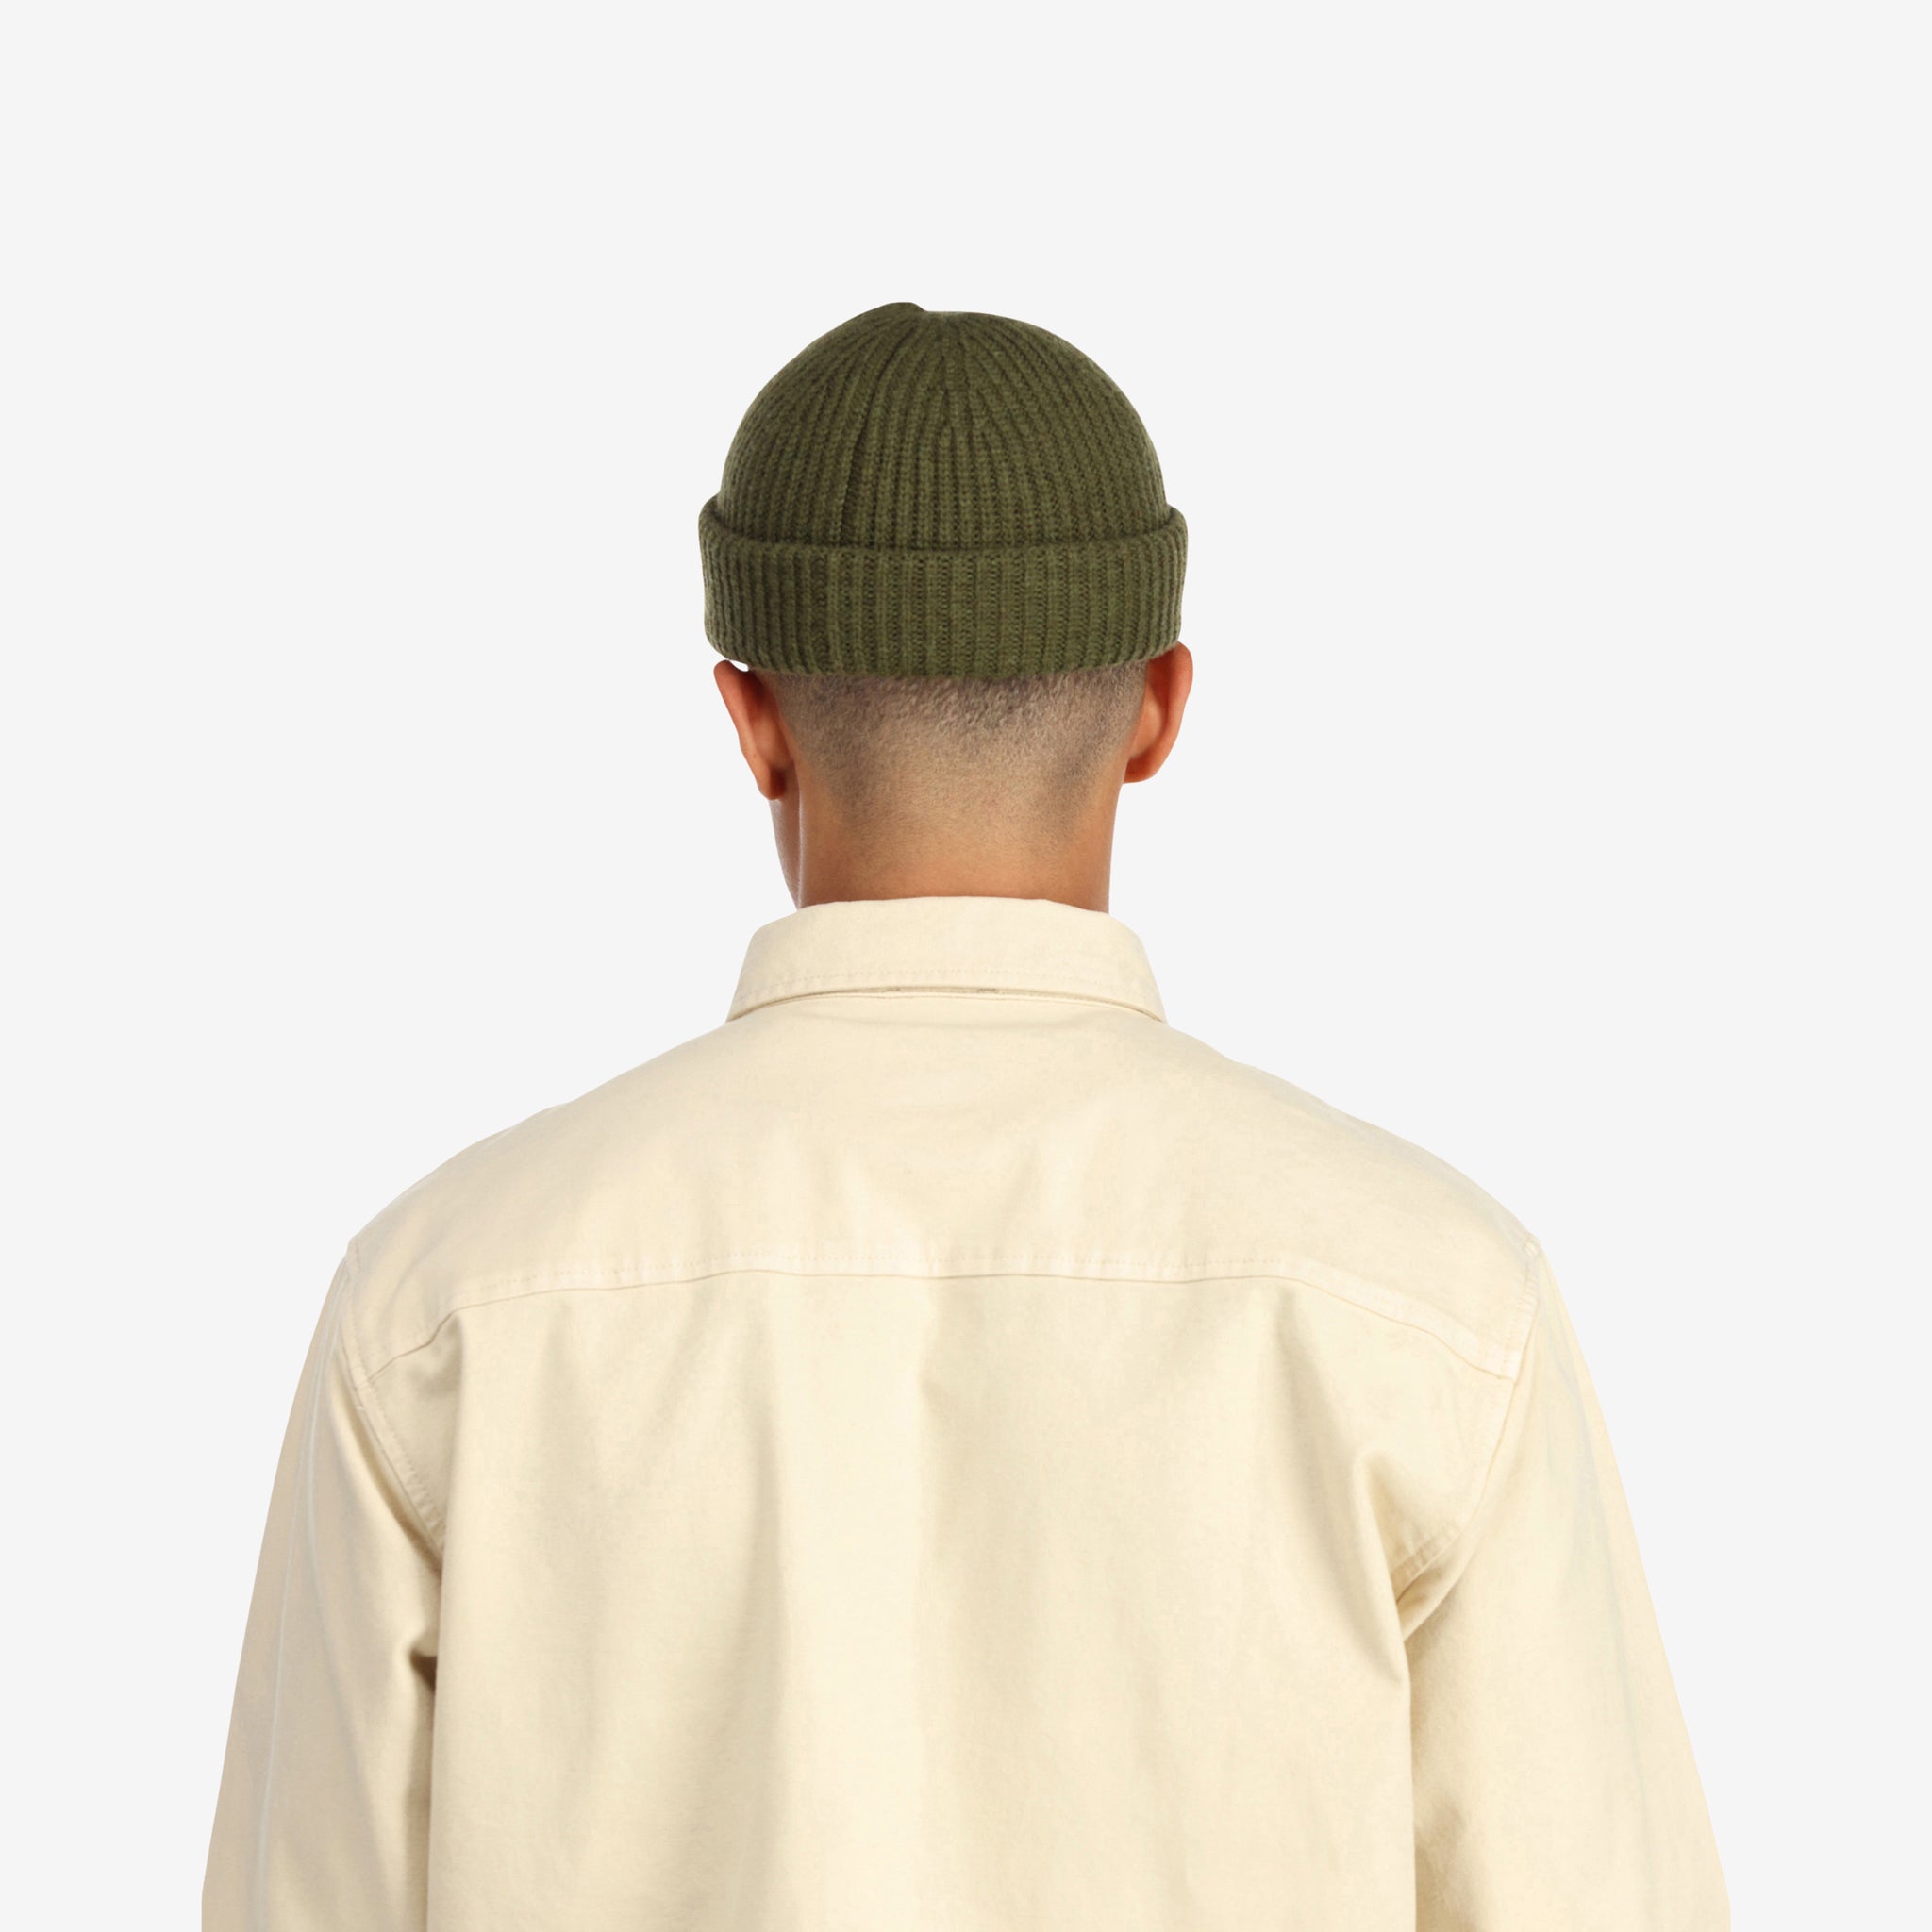 Back model shot of Topo Designs Global Beanie merino wool blend watchman cap in "olive" green.